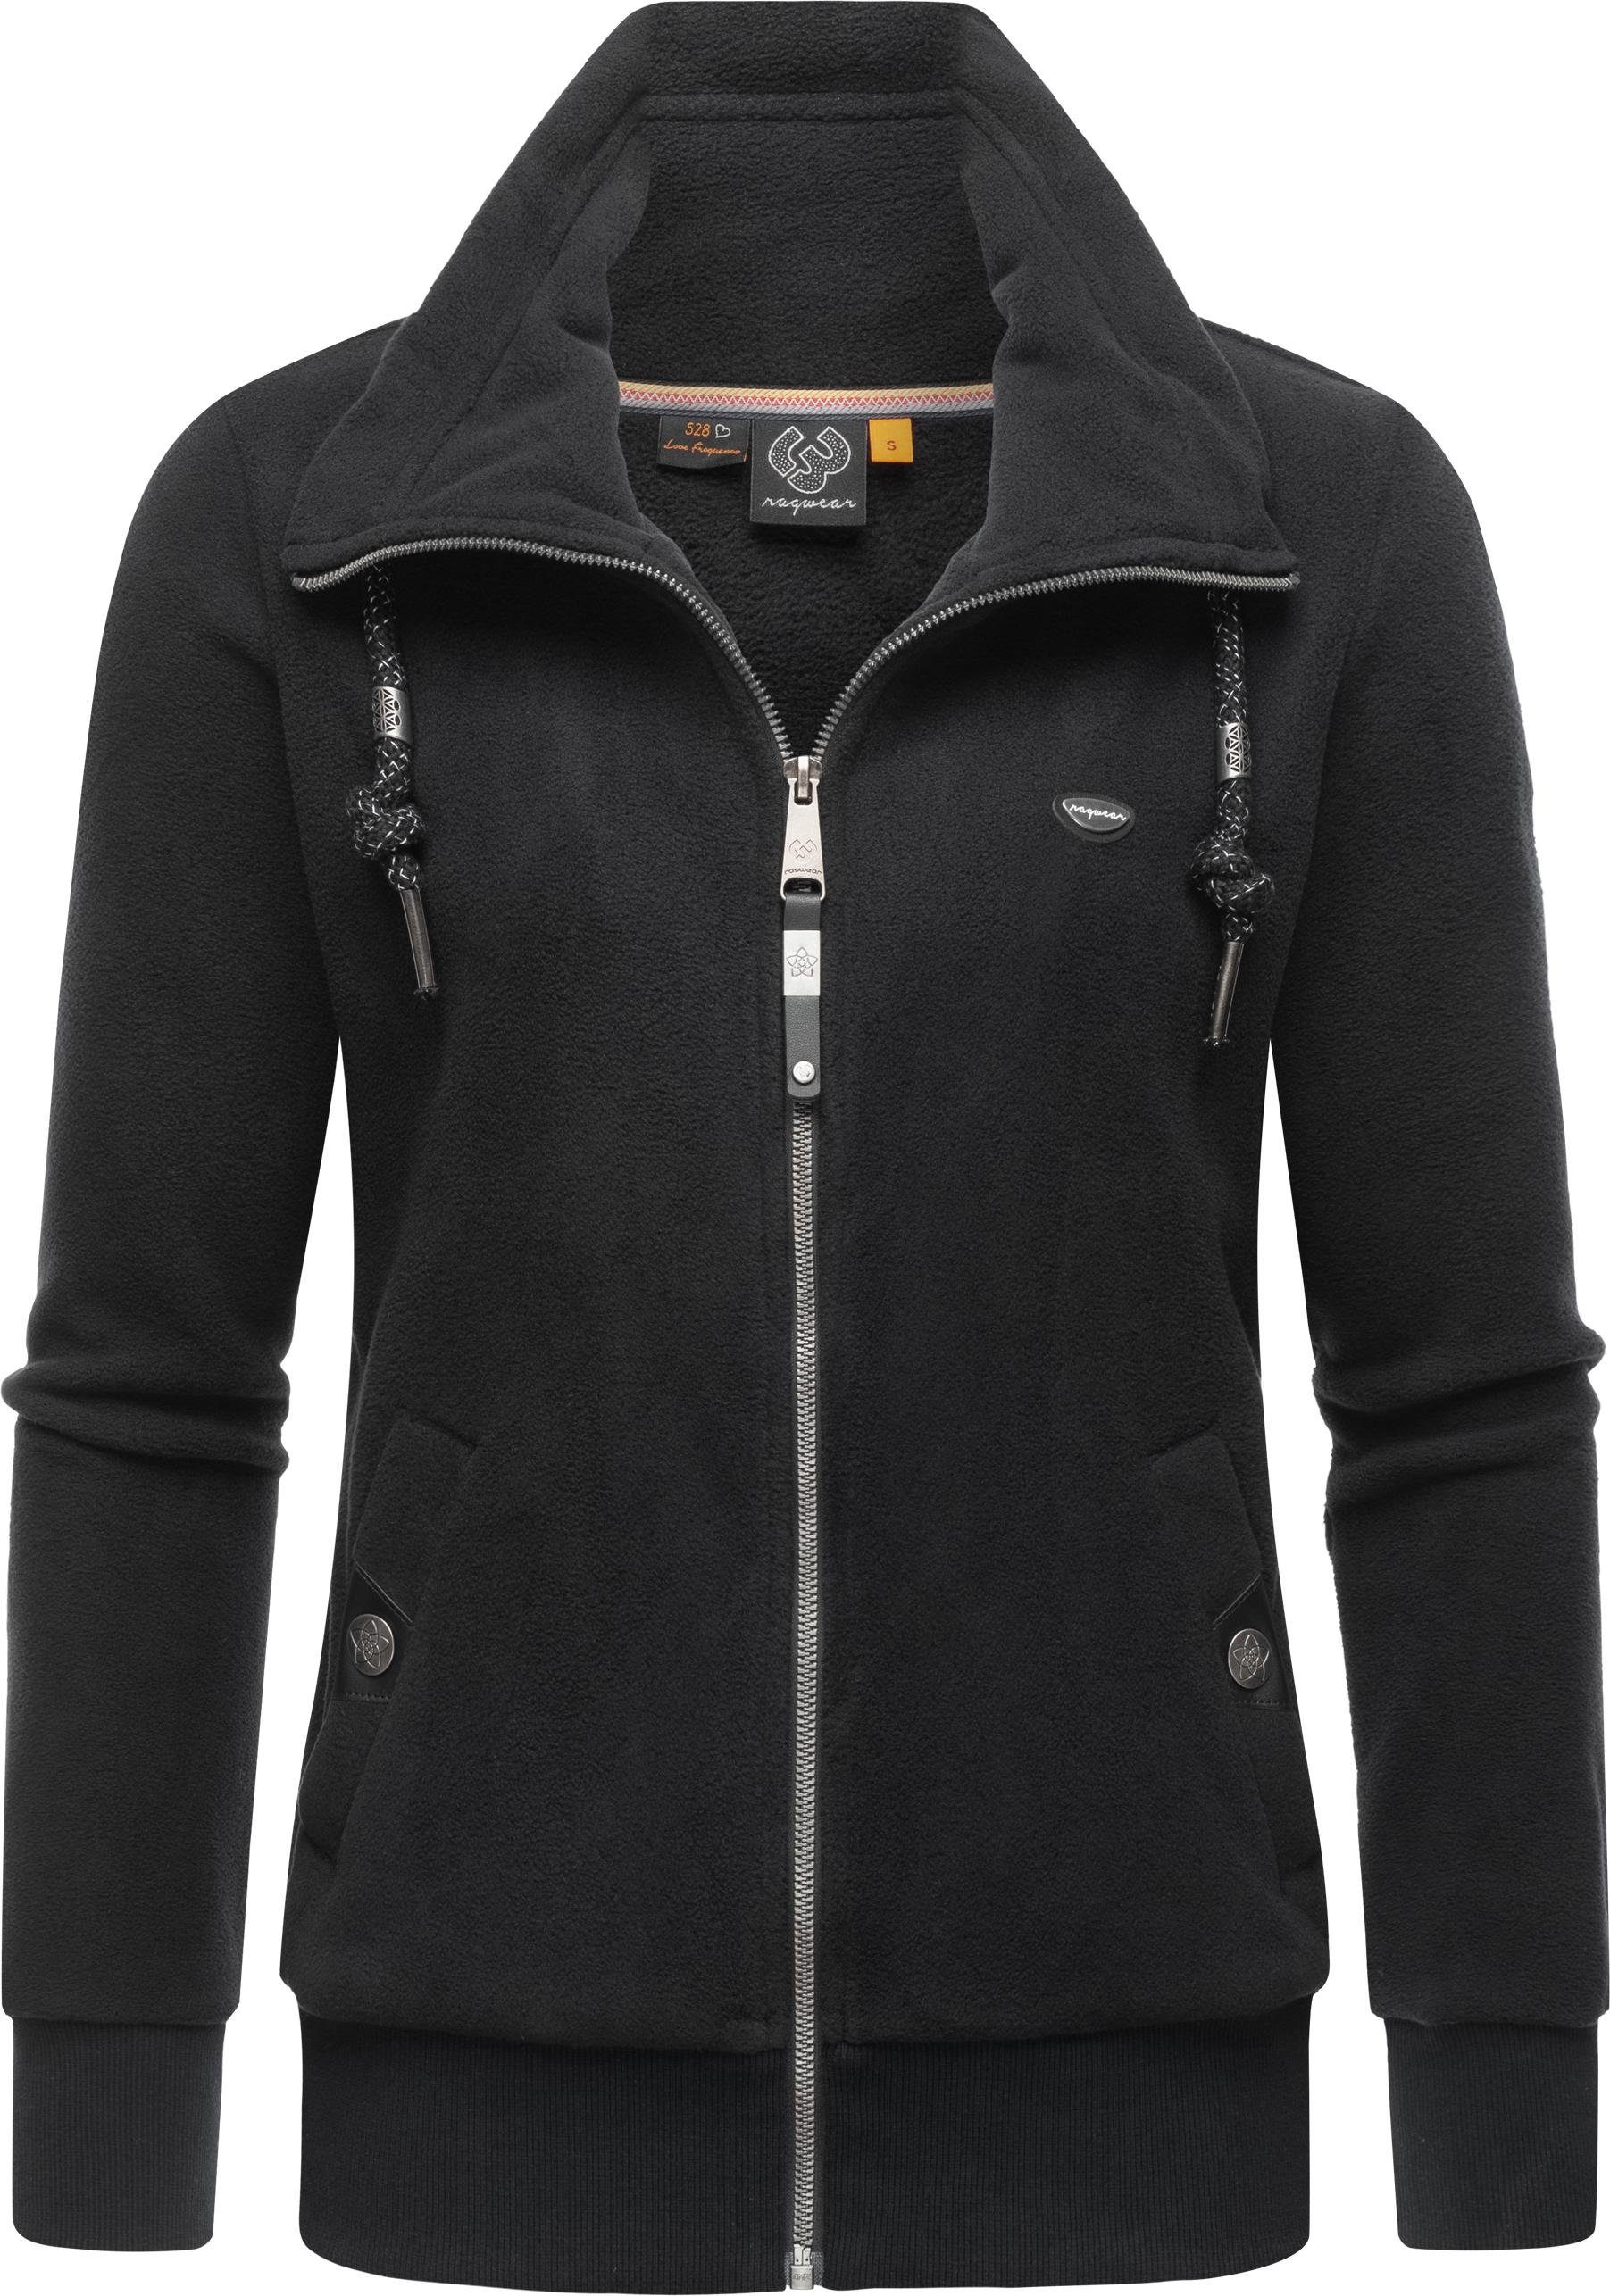 Ragwear Sweatjacke Rylie Fleece Zip Solid weicher Fleece Zip-Sweater mit Kordeln schwarz